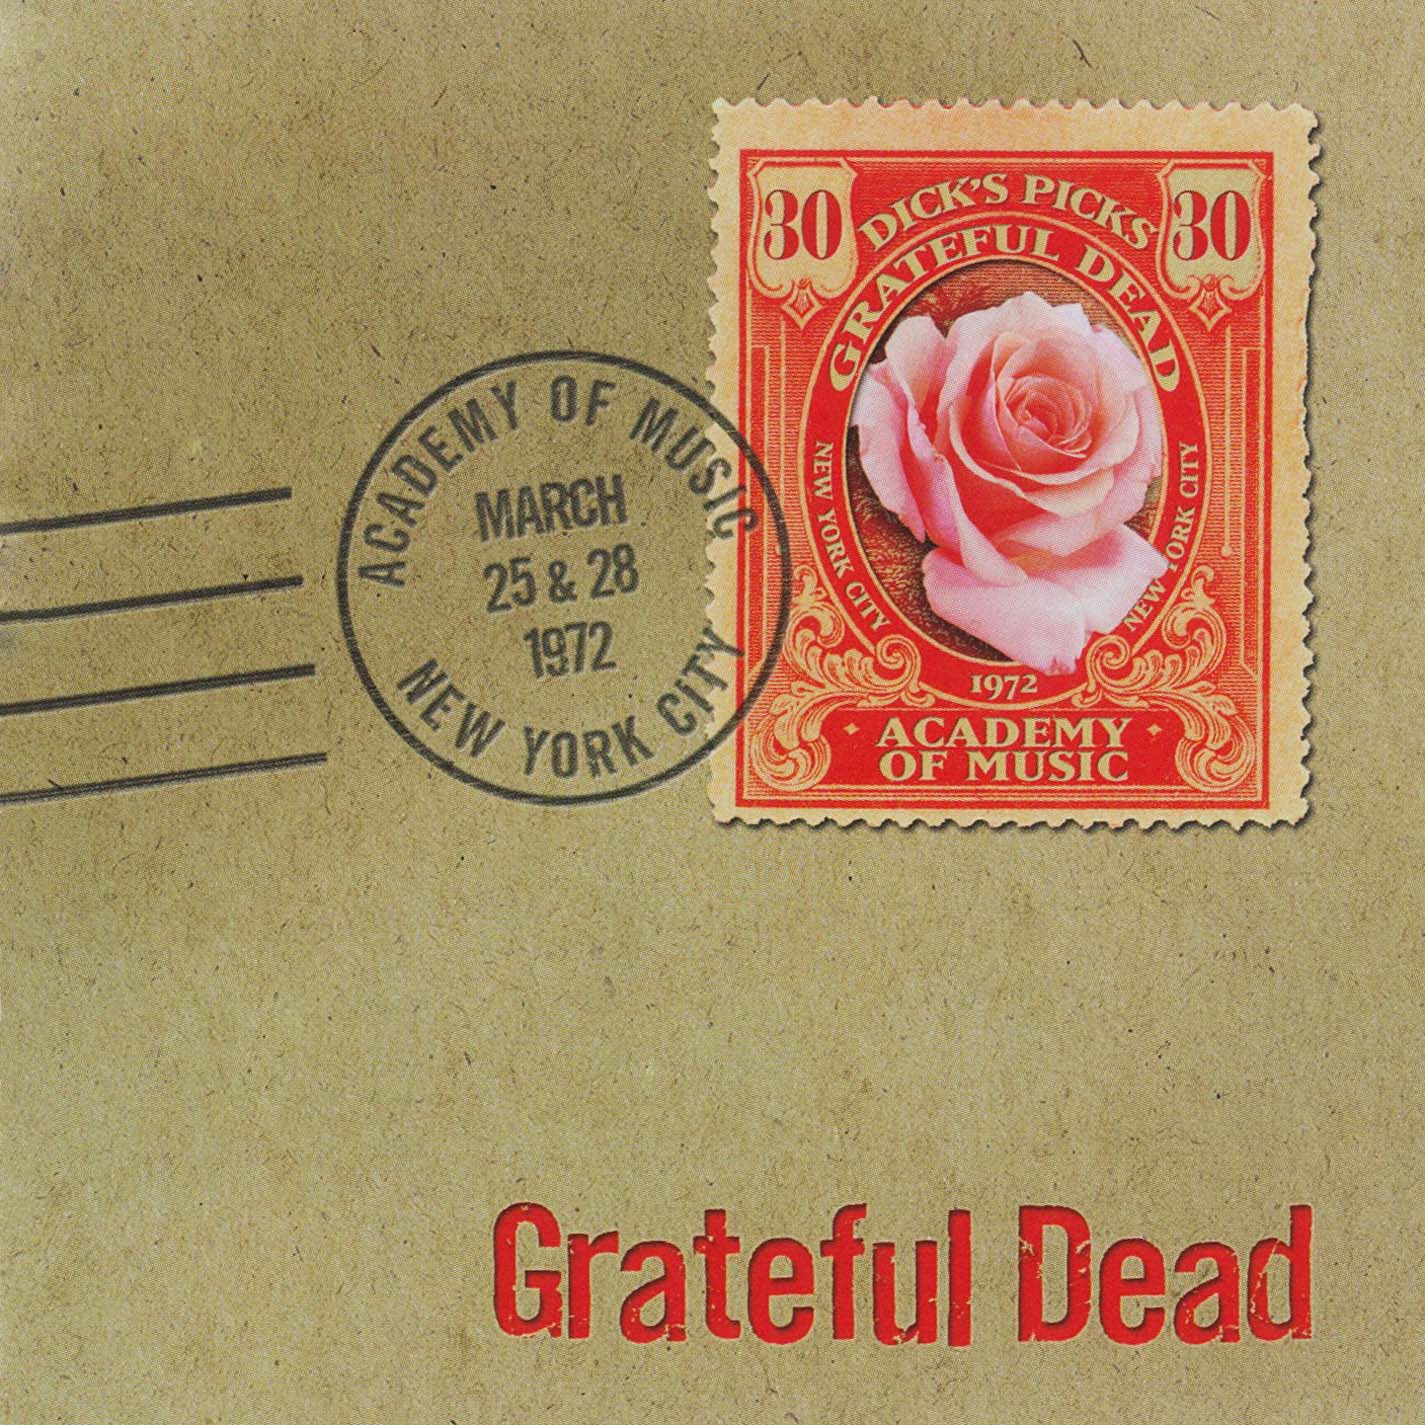 Grateful Dead Dick's Picks 30 album cover artwork